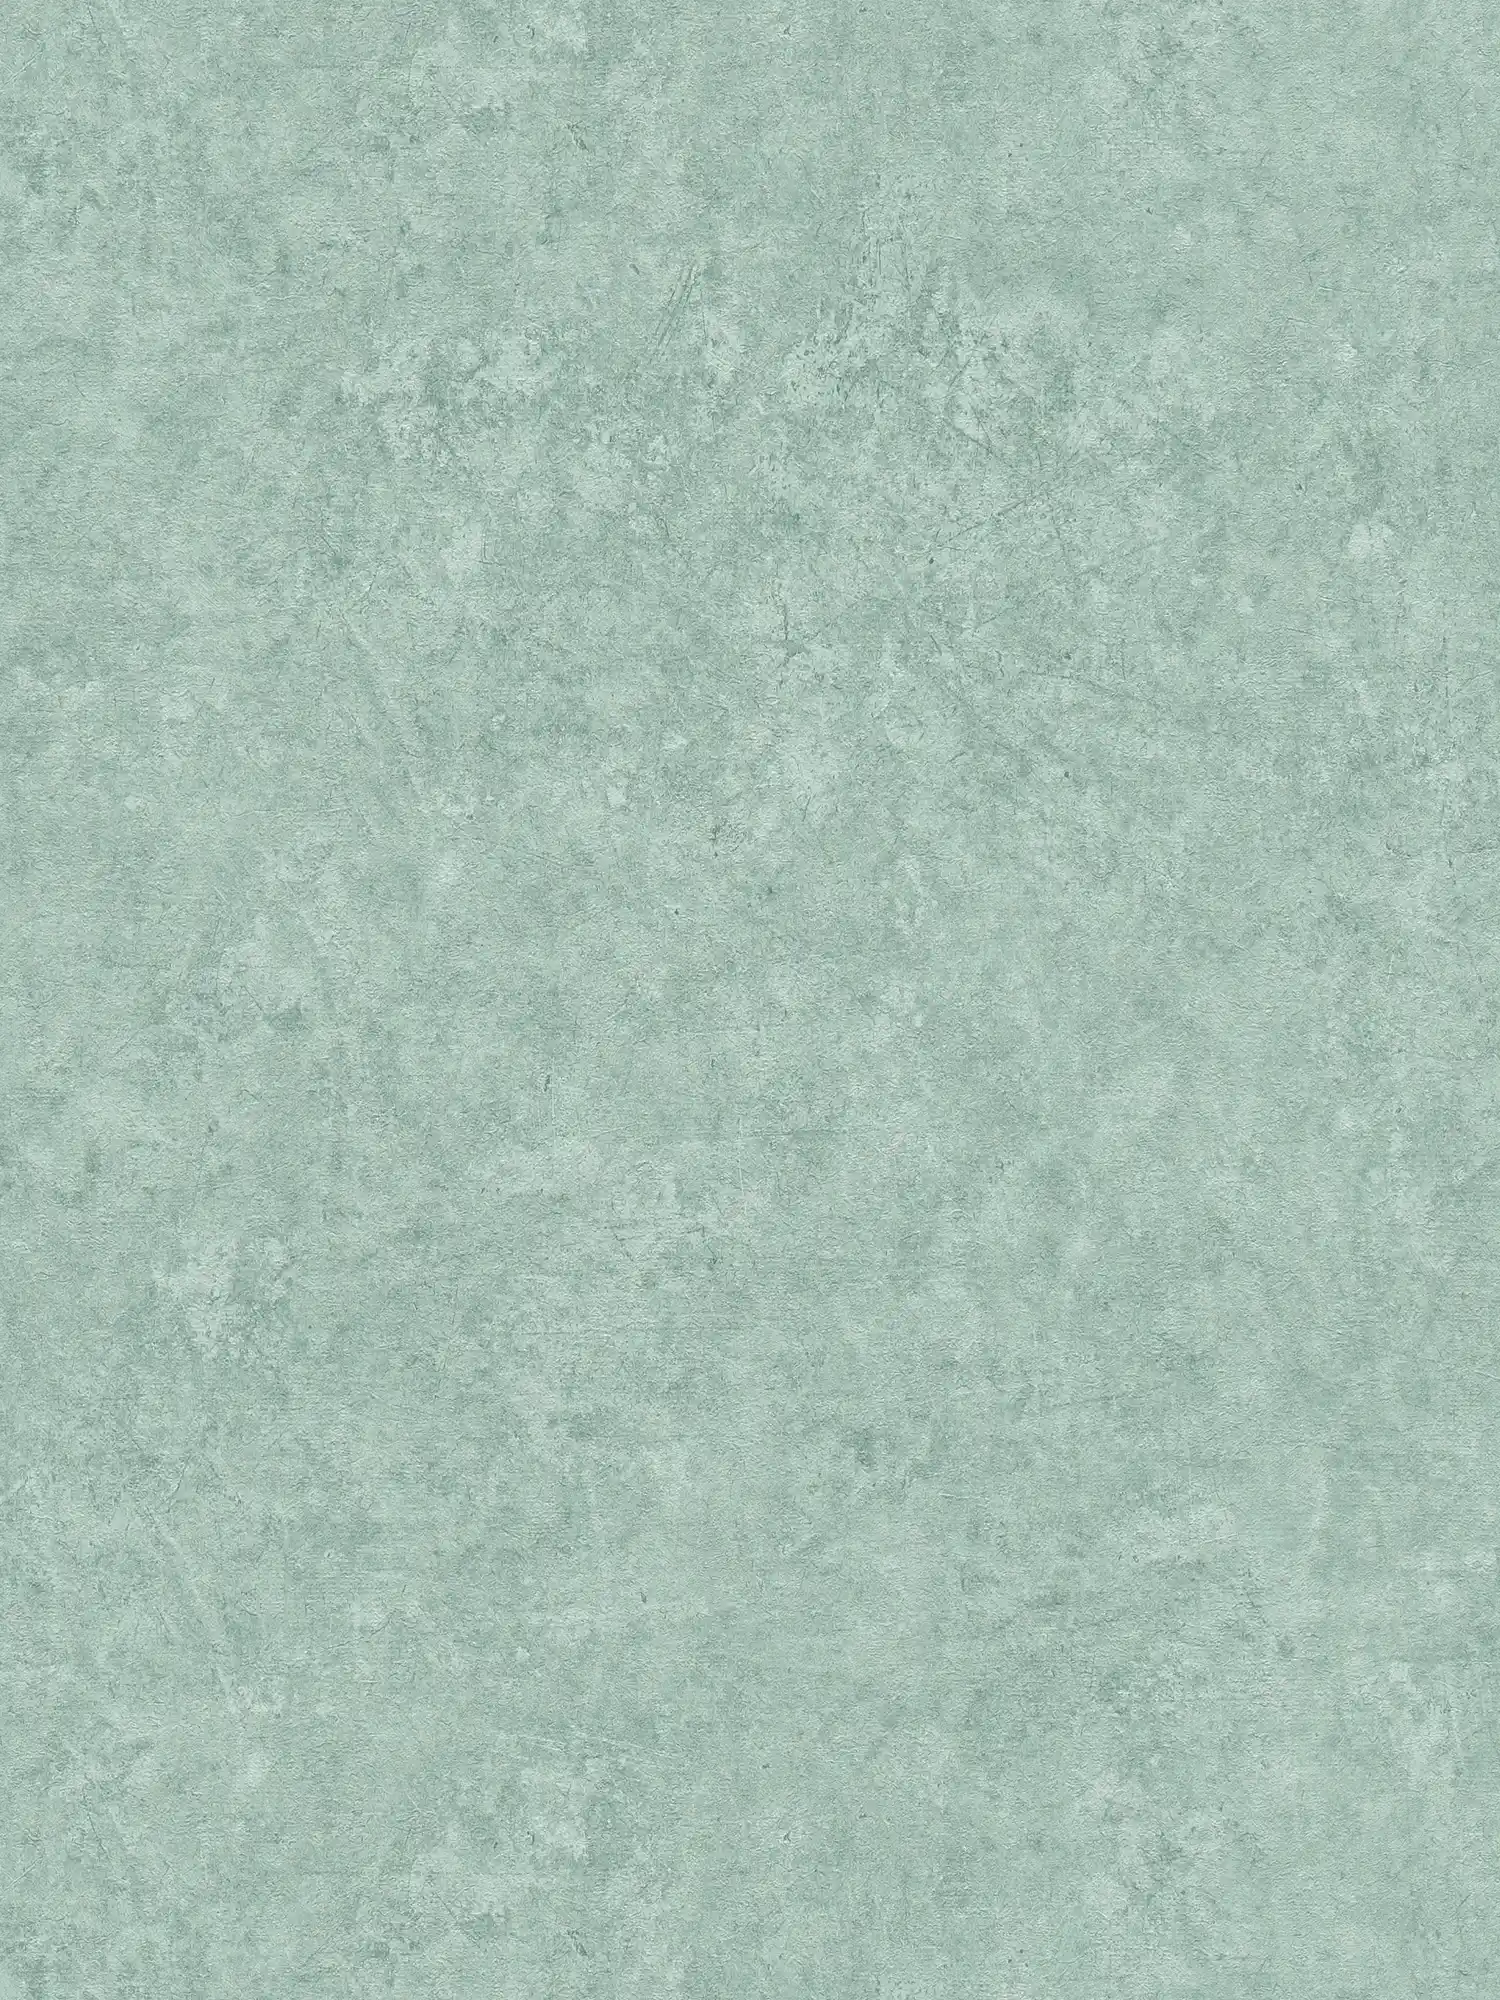 Textured non-woven wallpaper in plain - green
